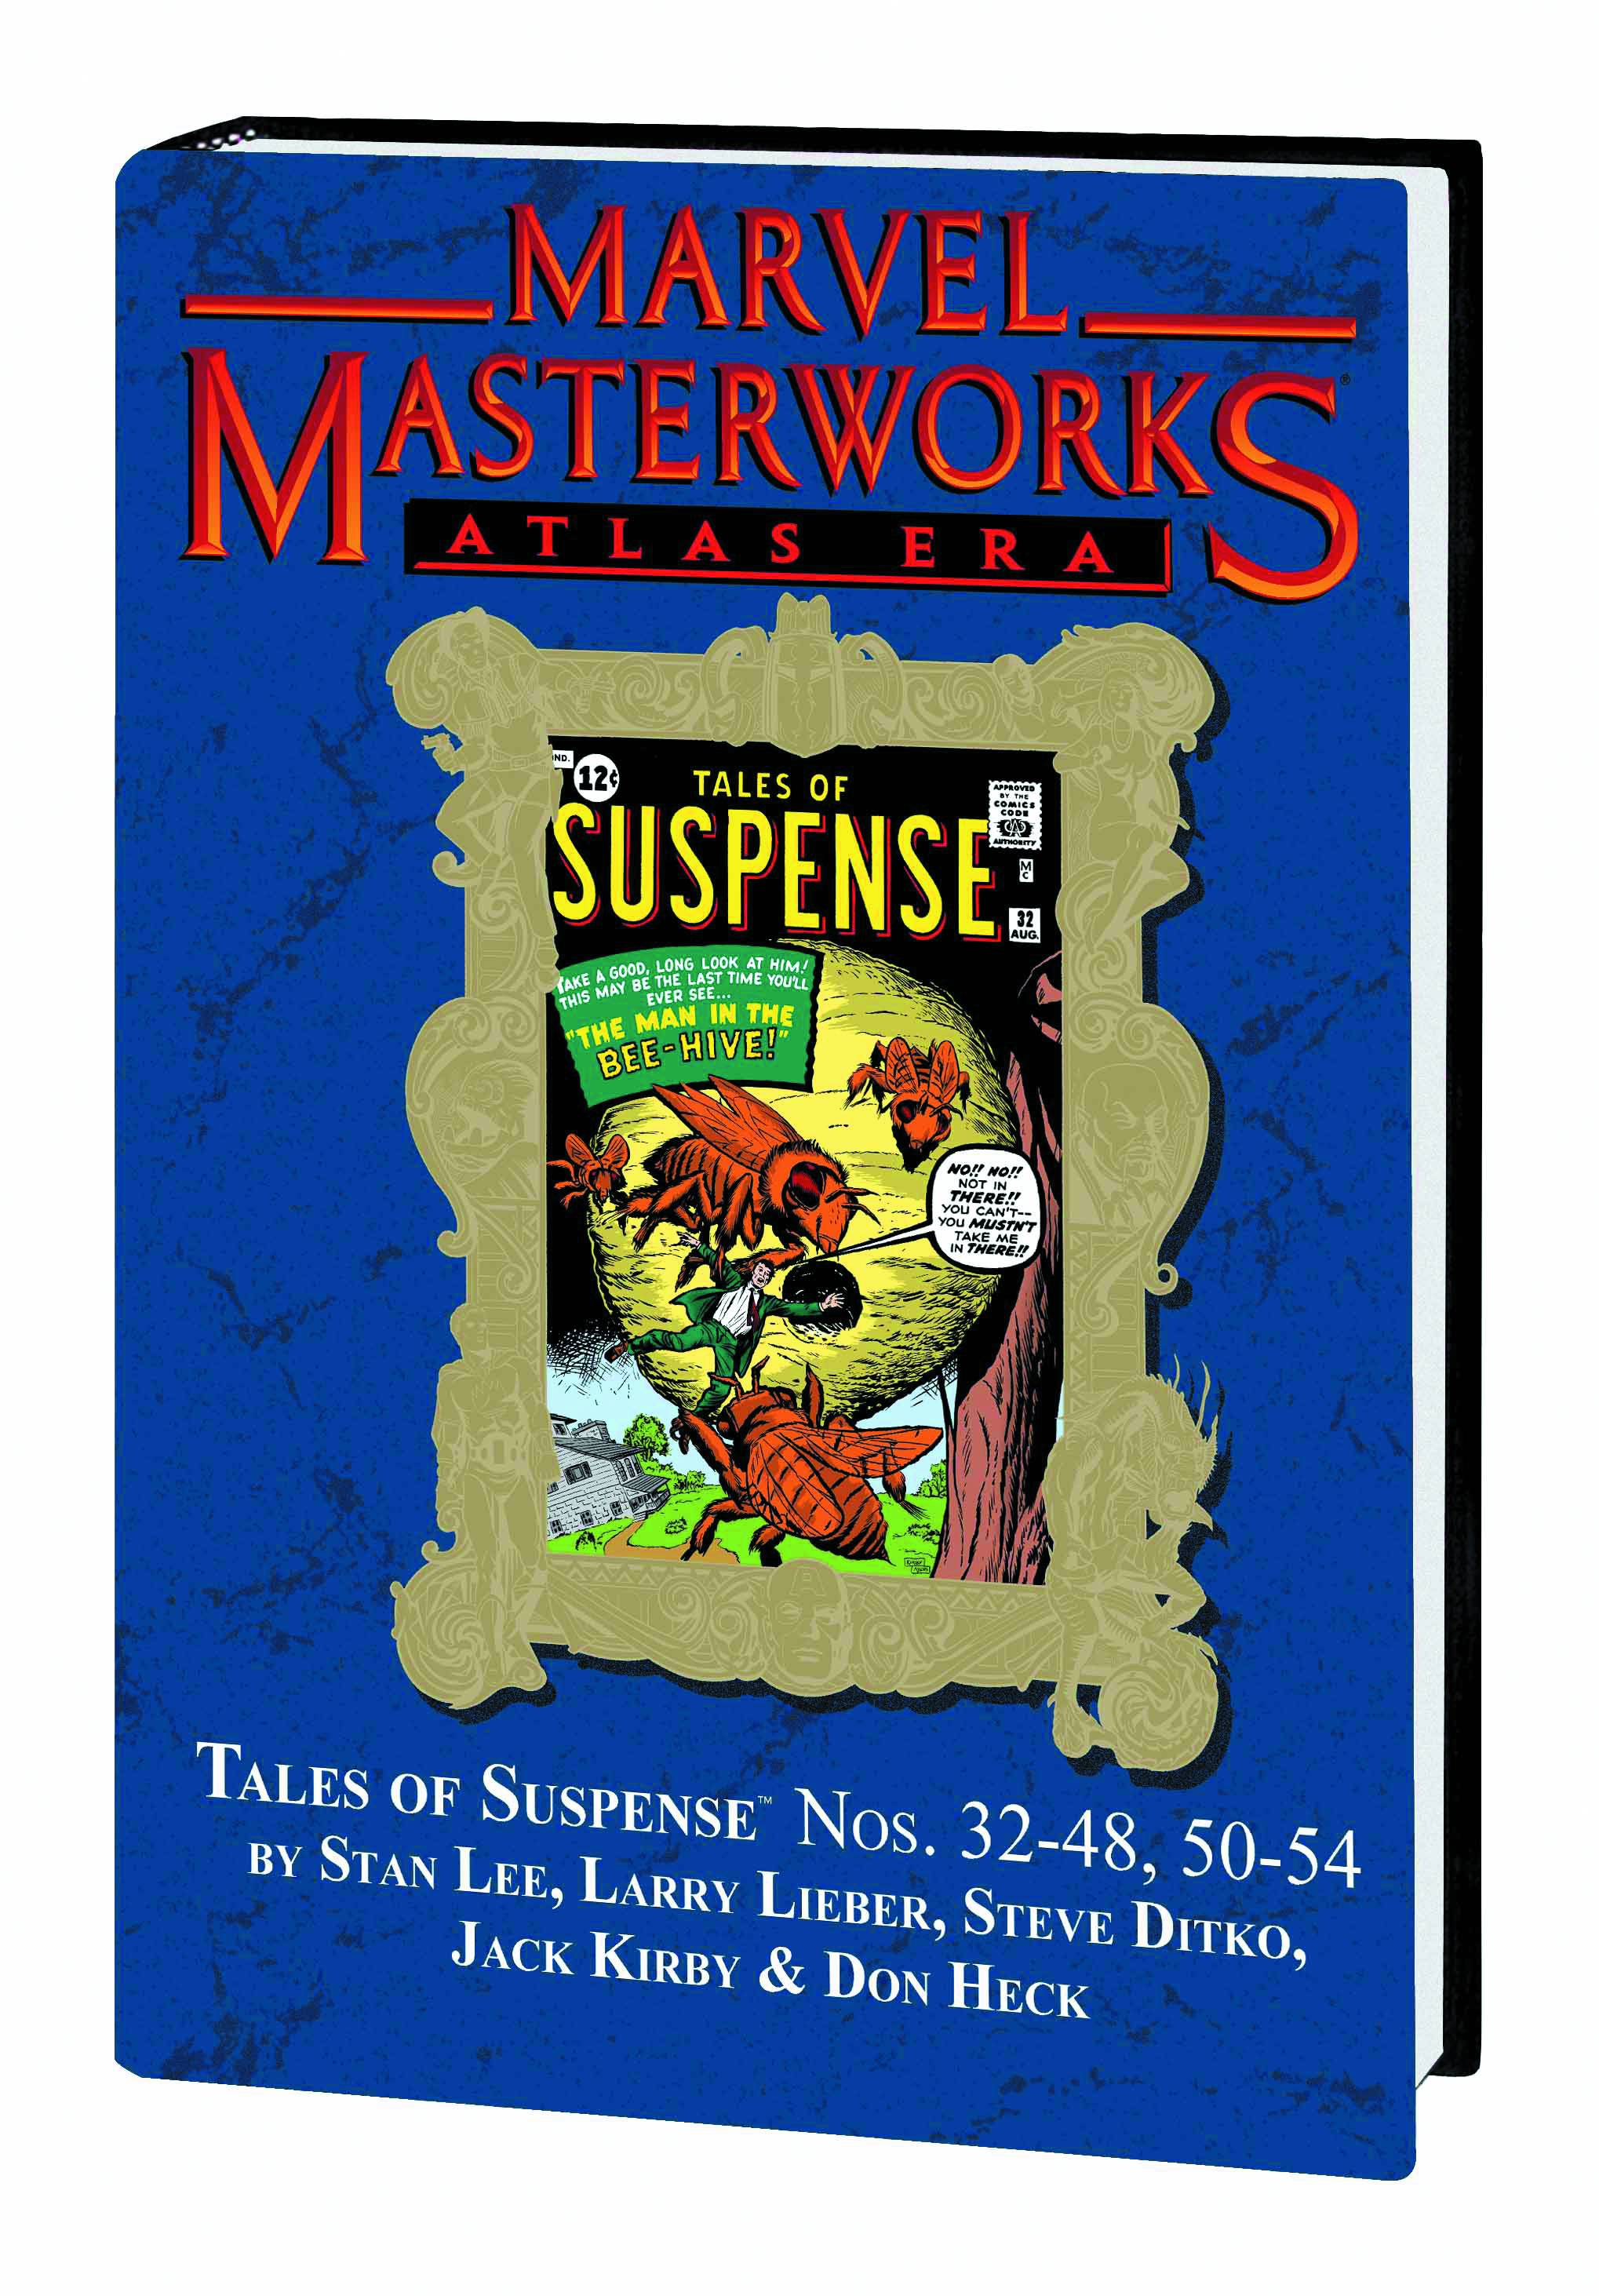 Marvel Masterworks Atlas Era Tales of Suspense Hardcover Volume 4 Direct Market Variant Edition 186